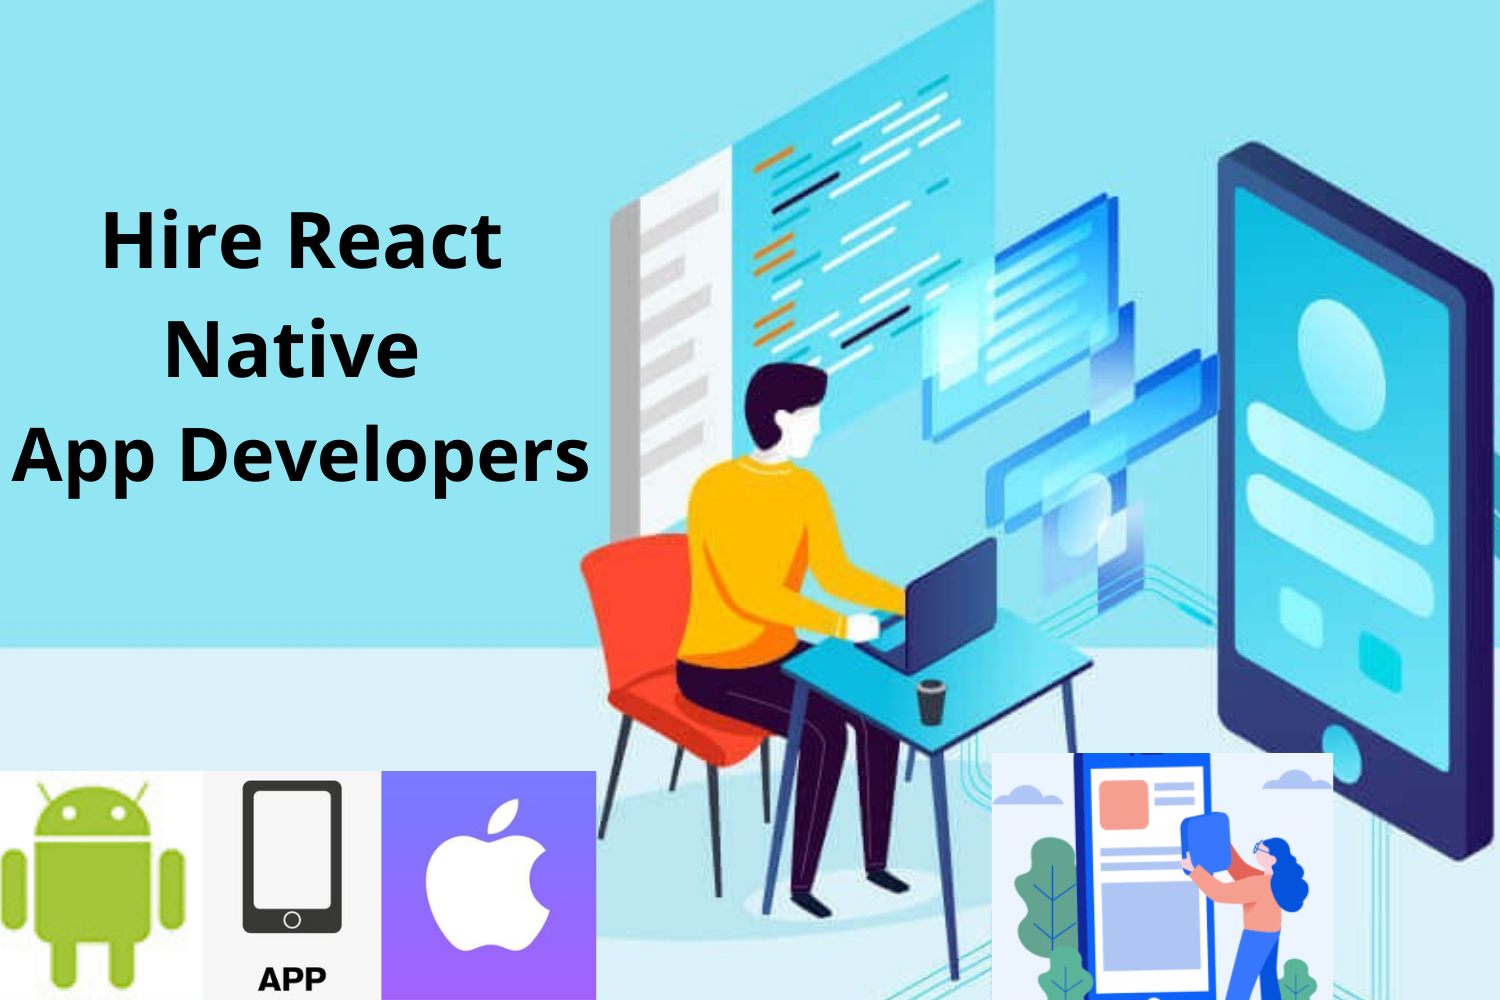 hire react native developer